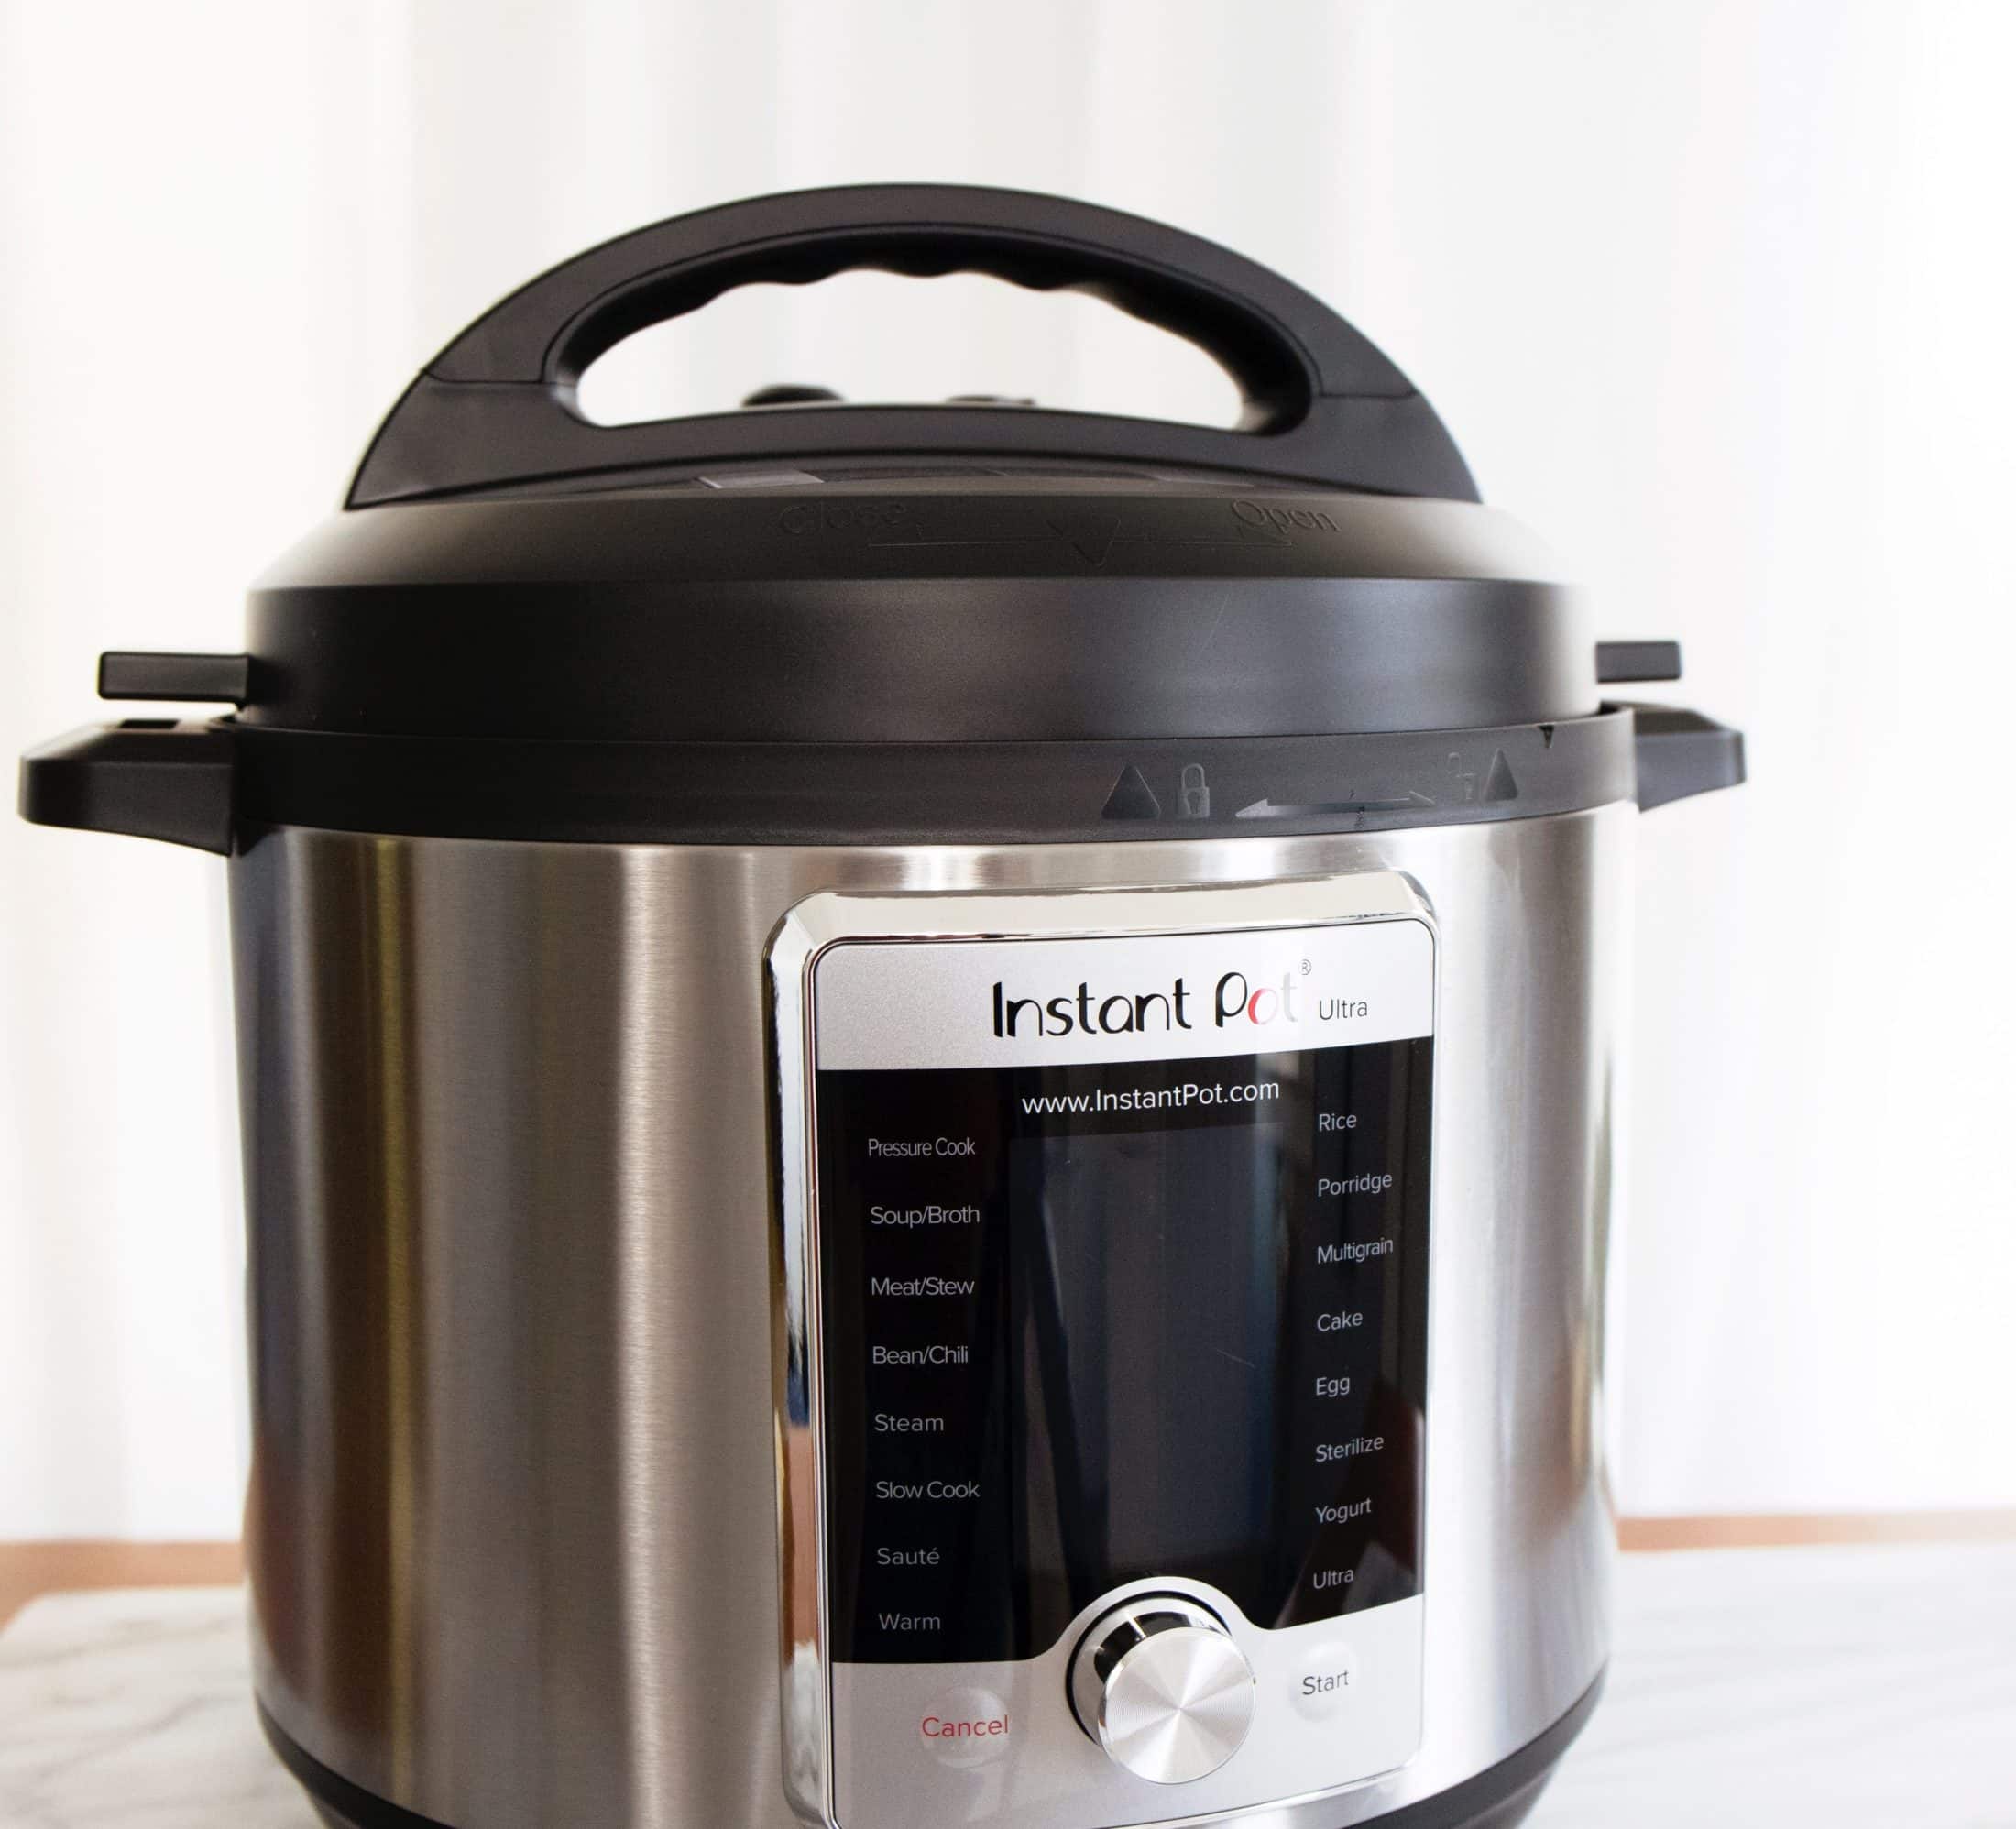 Instant pot slow cooker